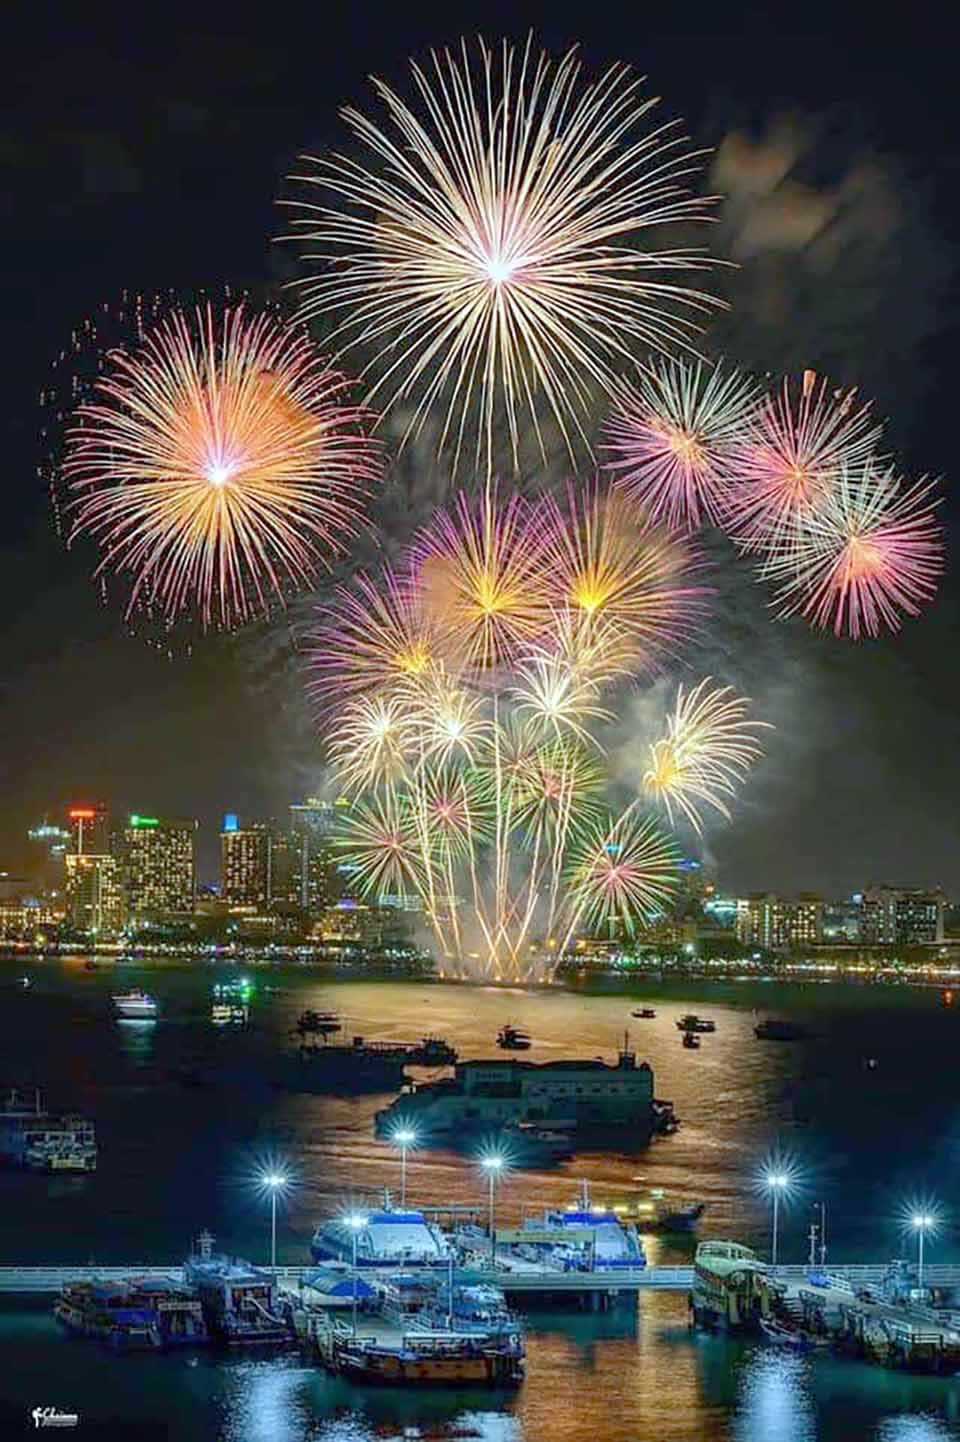 t 04 ‘Pattaya Fireworks Festival 2022 ready to dazzle and amaze the crowd on Fri Sat Nov 25 26 5